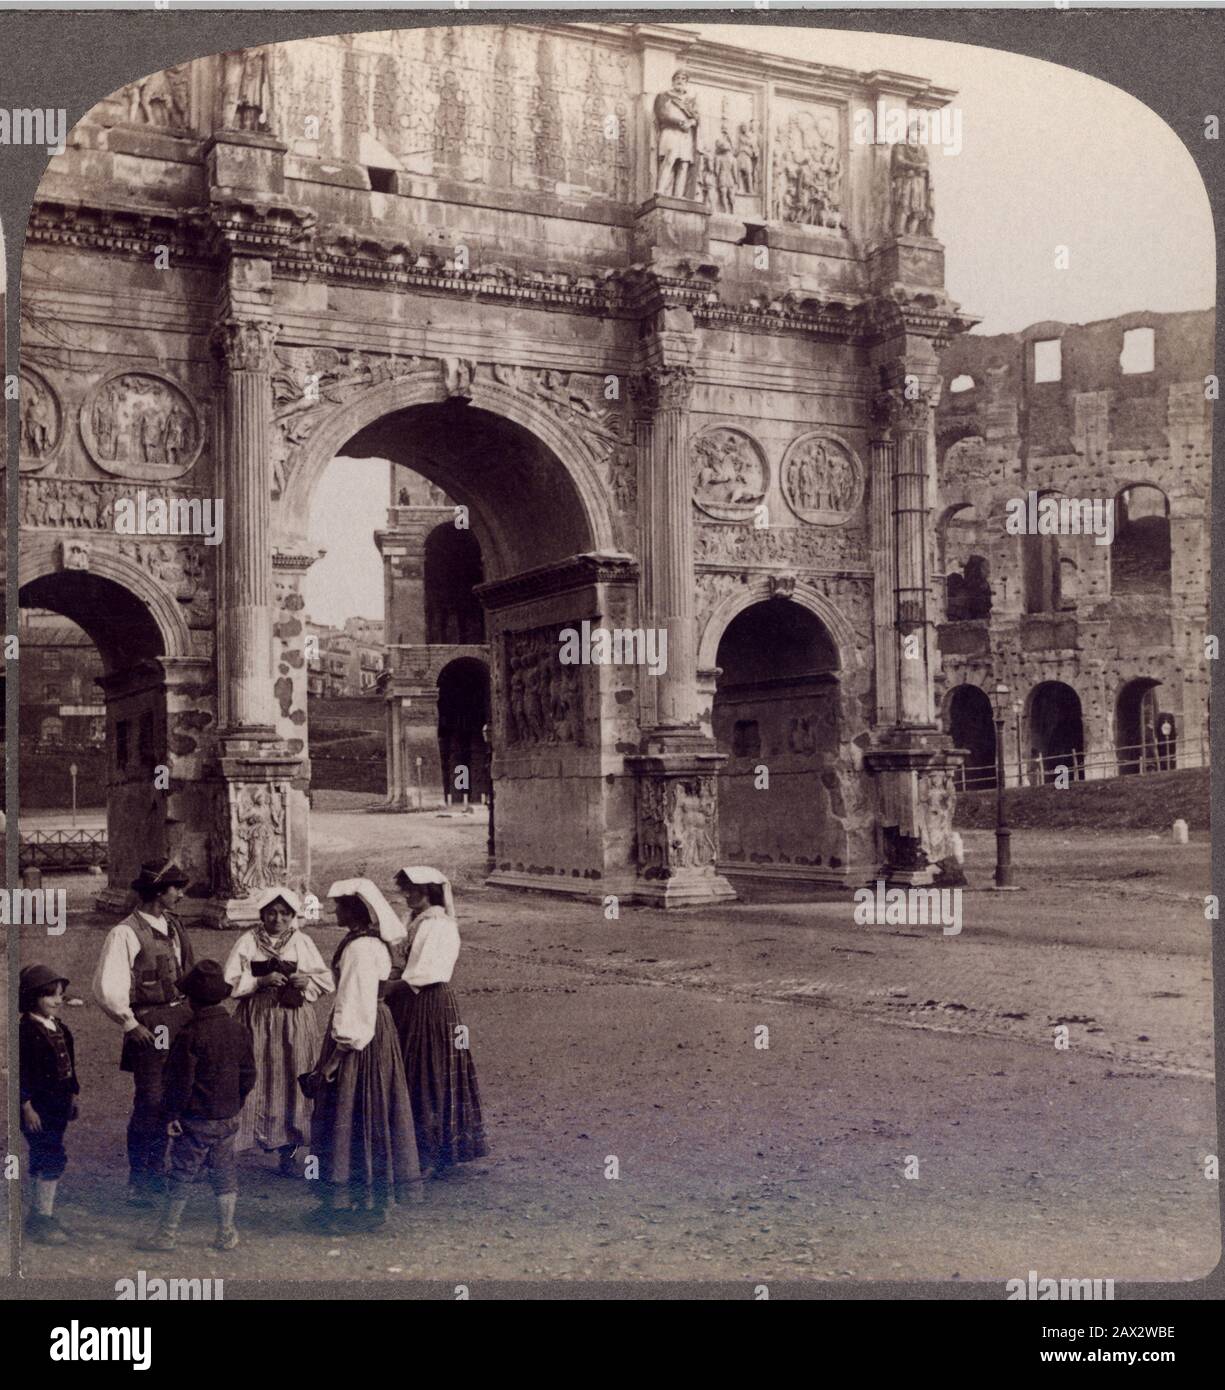 1897 , ROMA , ITALIE : LE COLOSSEO avec L'ARCHE TRIOMPHALE DE COSTANTIN . PHOTO PAR UNDERWOOD & UNDERWOOD VIEW , USA - COLISEUM - ITALIA - FOTO STORICHE - HISTOIRE - GEOGRAFIA - GÉOGRAPHIE - ARCHITETTURA - ARCHITECTURE - ROME - ROMA - OTTOCENTO - '800 - 800 - ARCO TRIONFALE DI TRIONFO DI COSTANTINO - ARCHEOLOGIA - ARCHÉOLOGIE -- ARCHIVIO GBB Banque D'Images